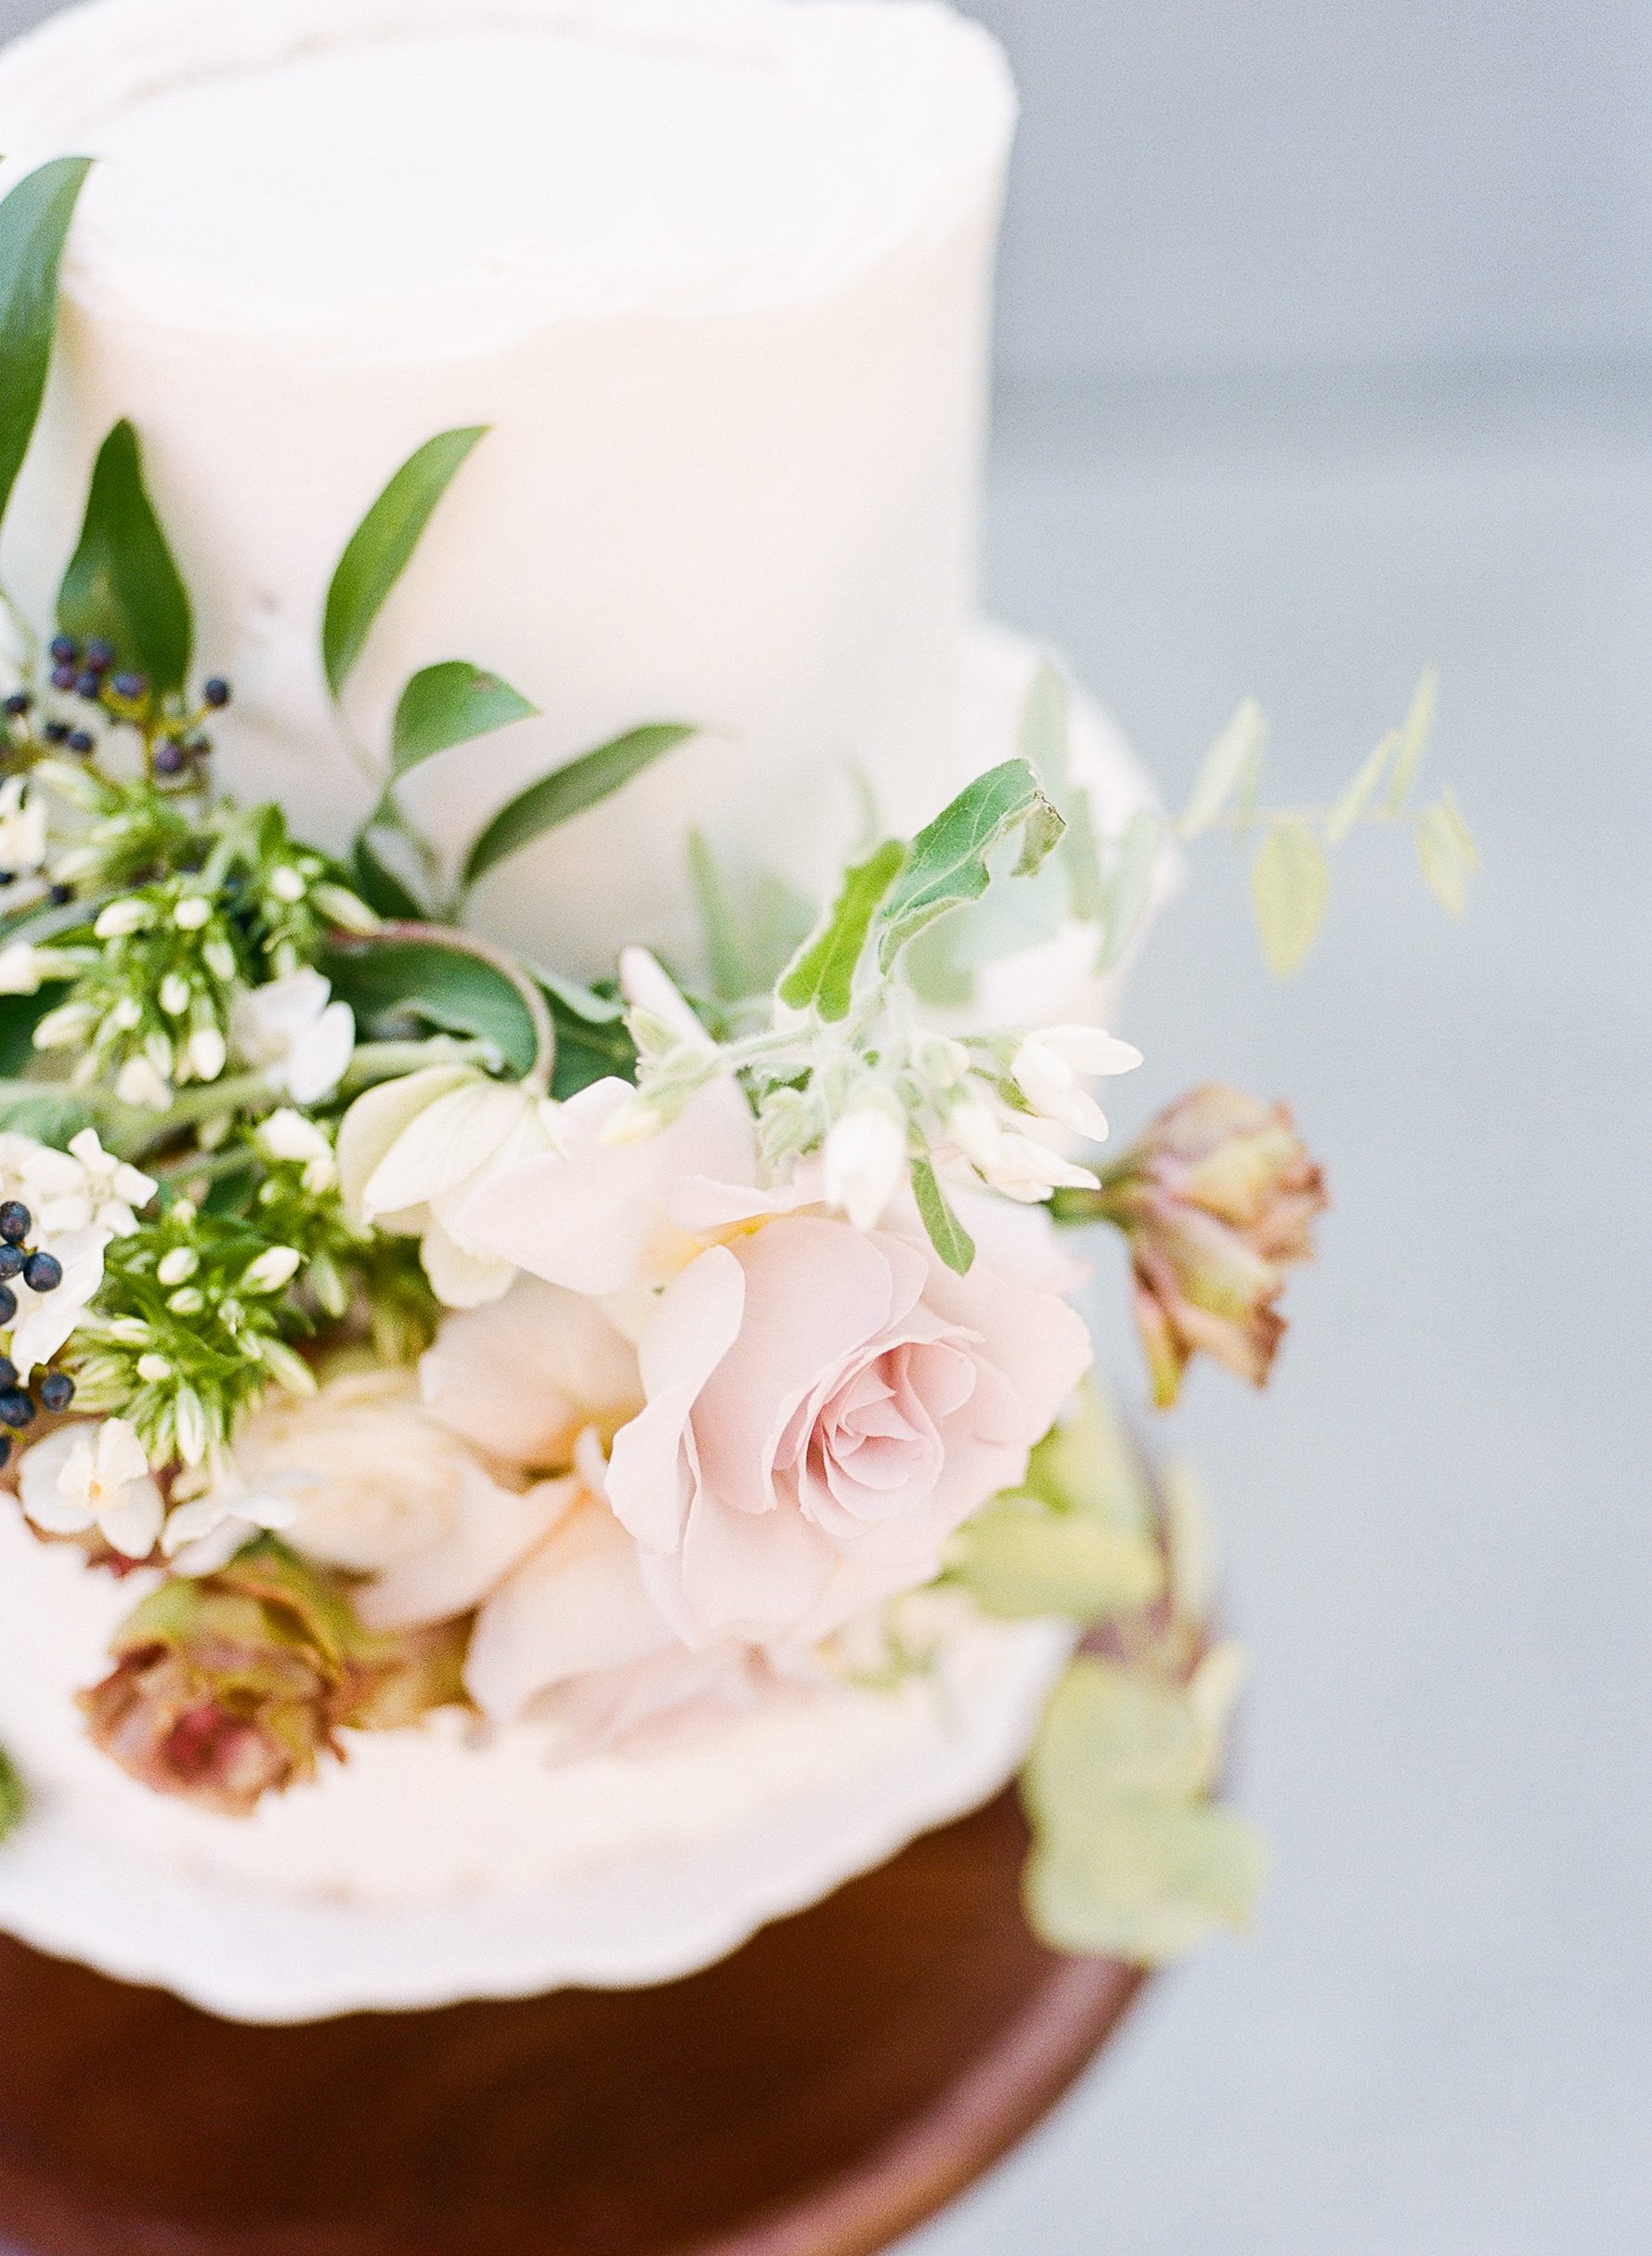 Wedding Cake Ideas White Cake with Flowers Photo